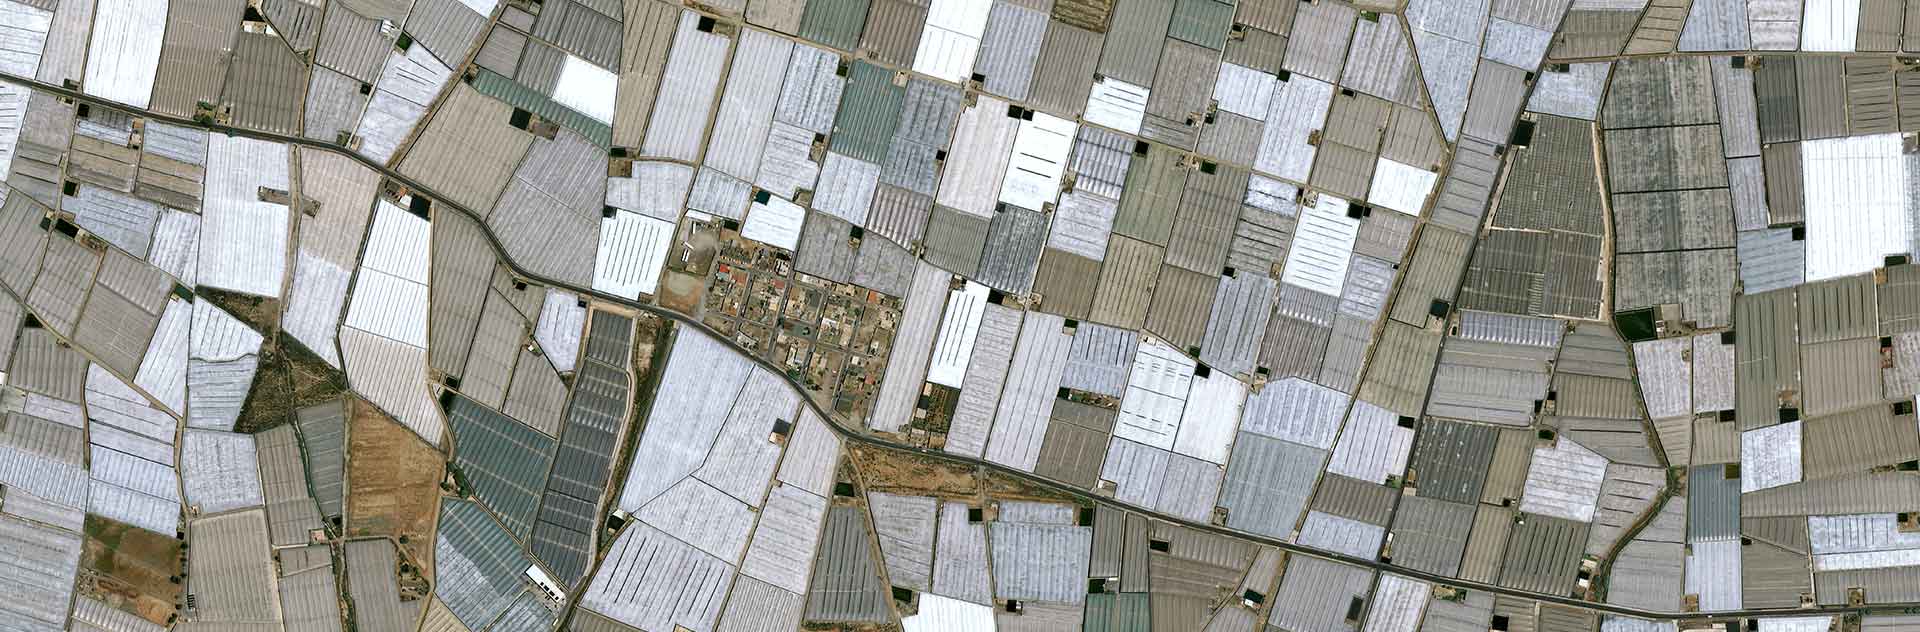 Pléiades Neo Image satellite - Greenhouses in Almeria - El Ejido, Spain,  30cm Resolution